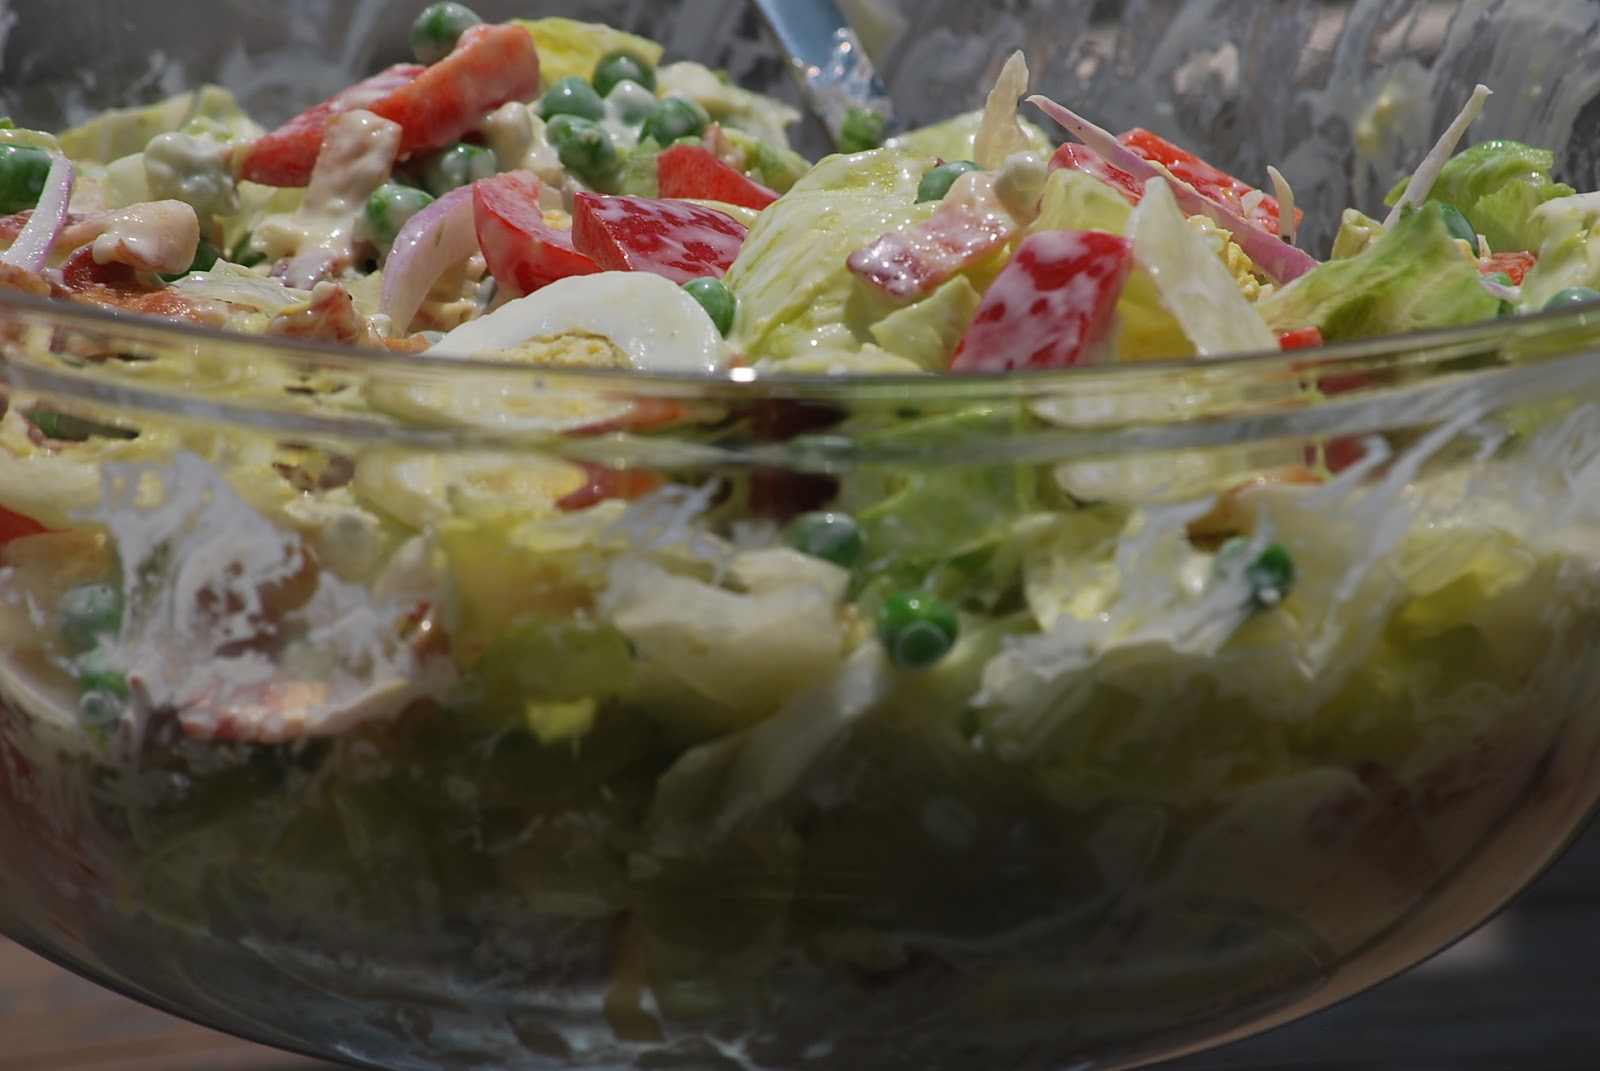 Picknick Salat — Rezepte Suchen